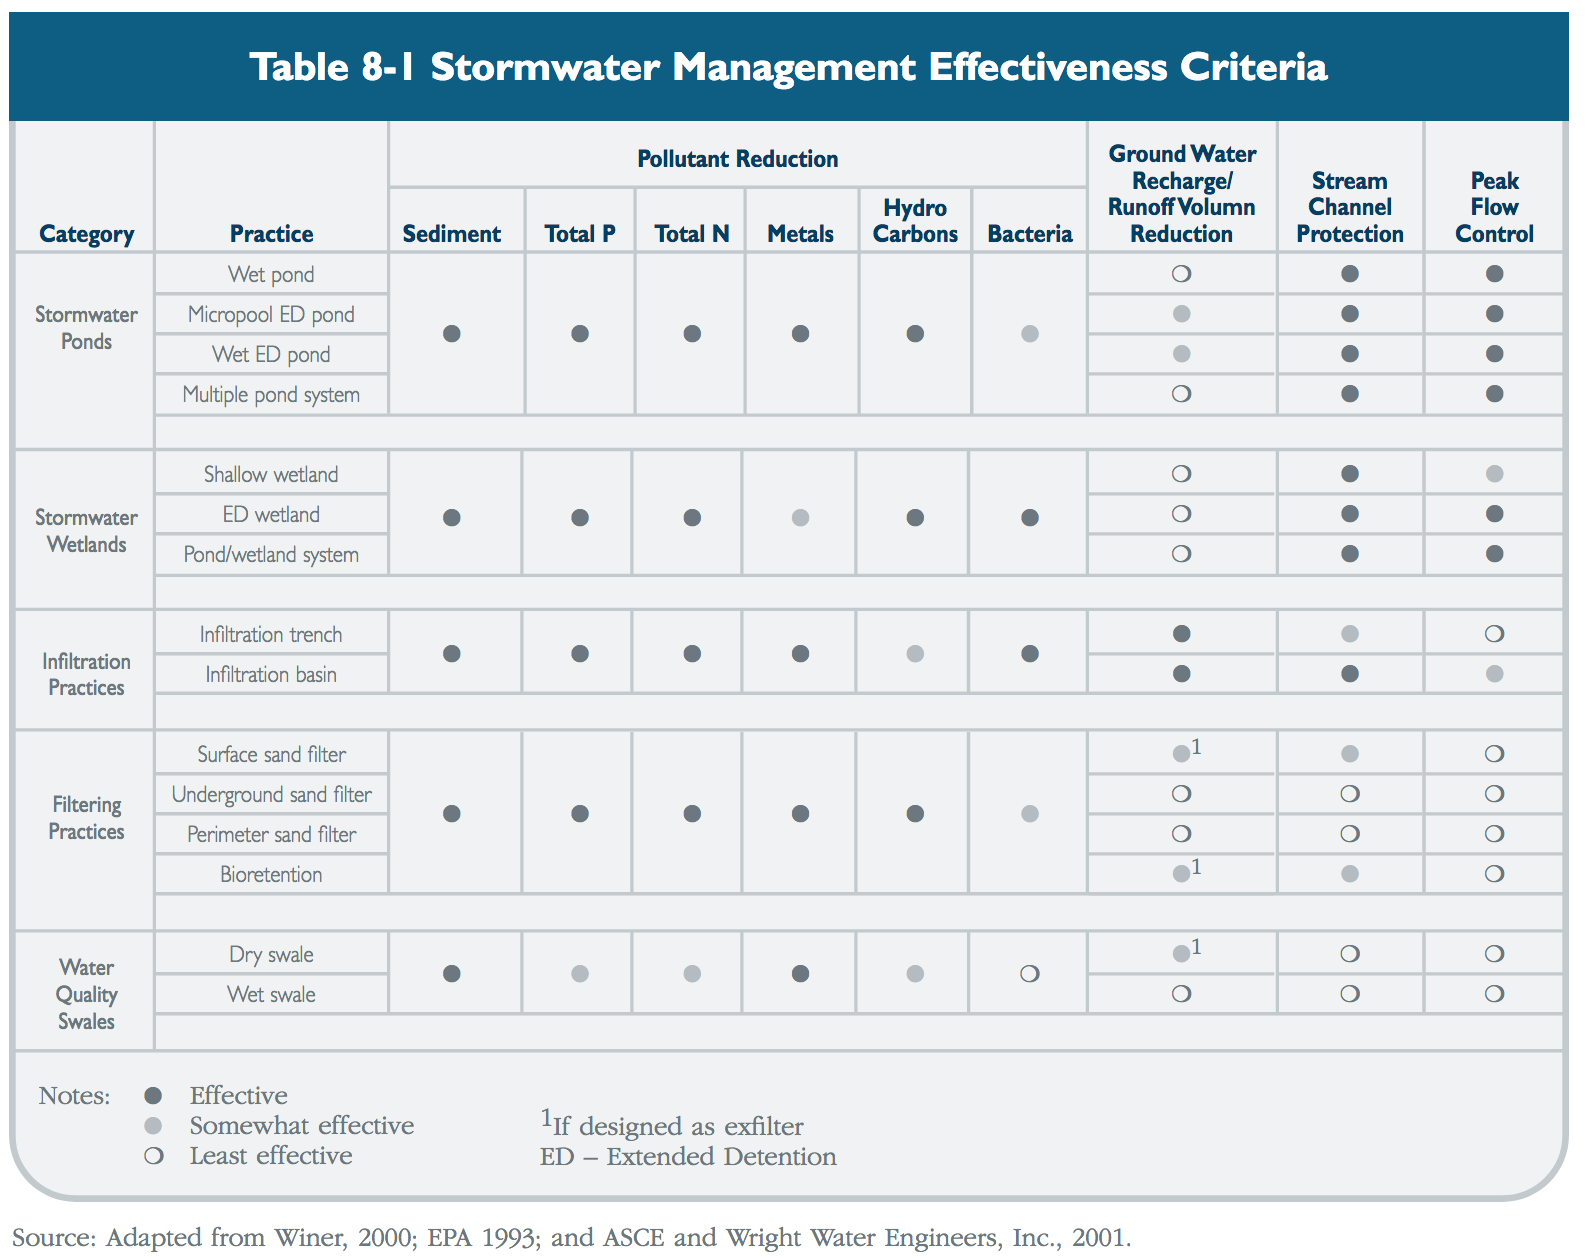 Stormwater Management Effectiveness Criteria